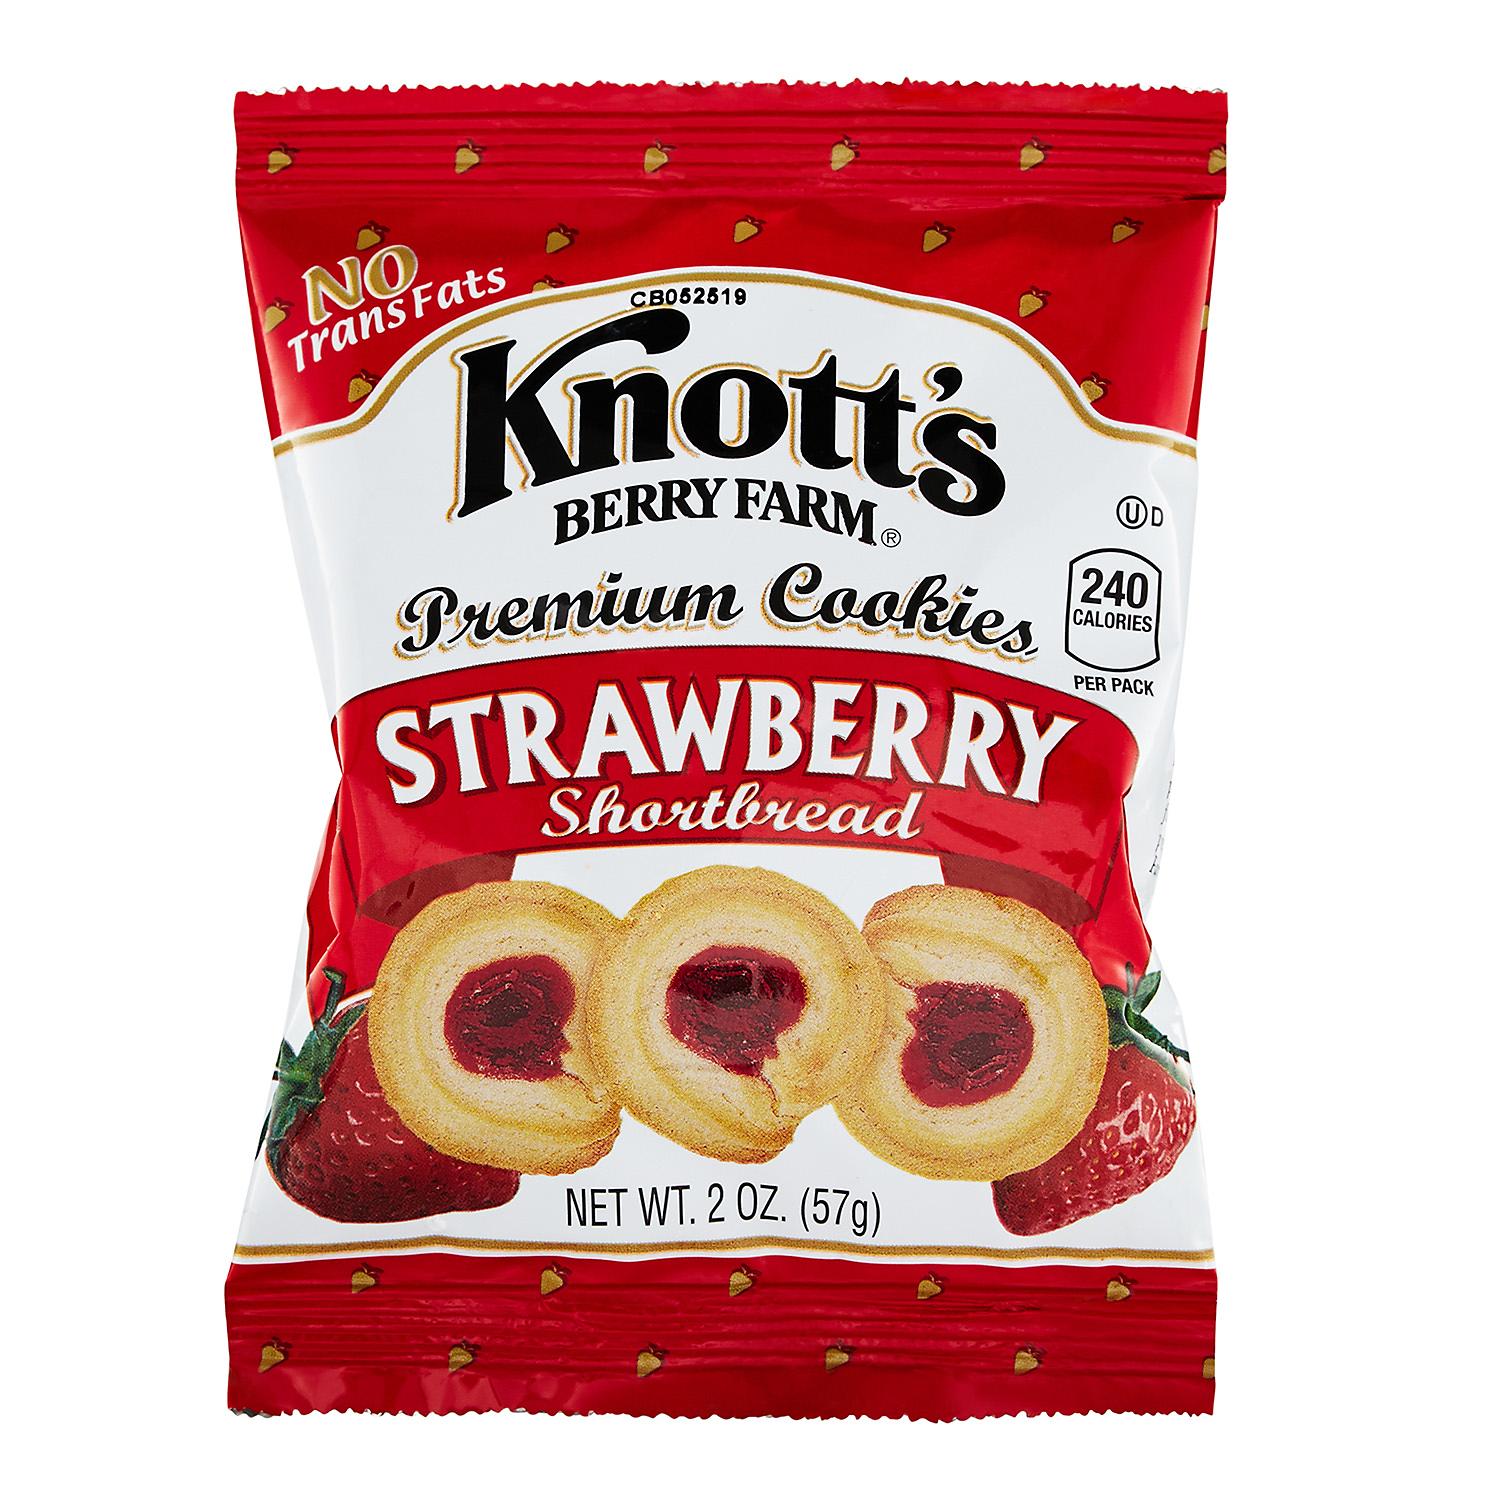 Knott's Berry Farm Strawberry Shortbread Cookies (2 oz., 36 pk